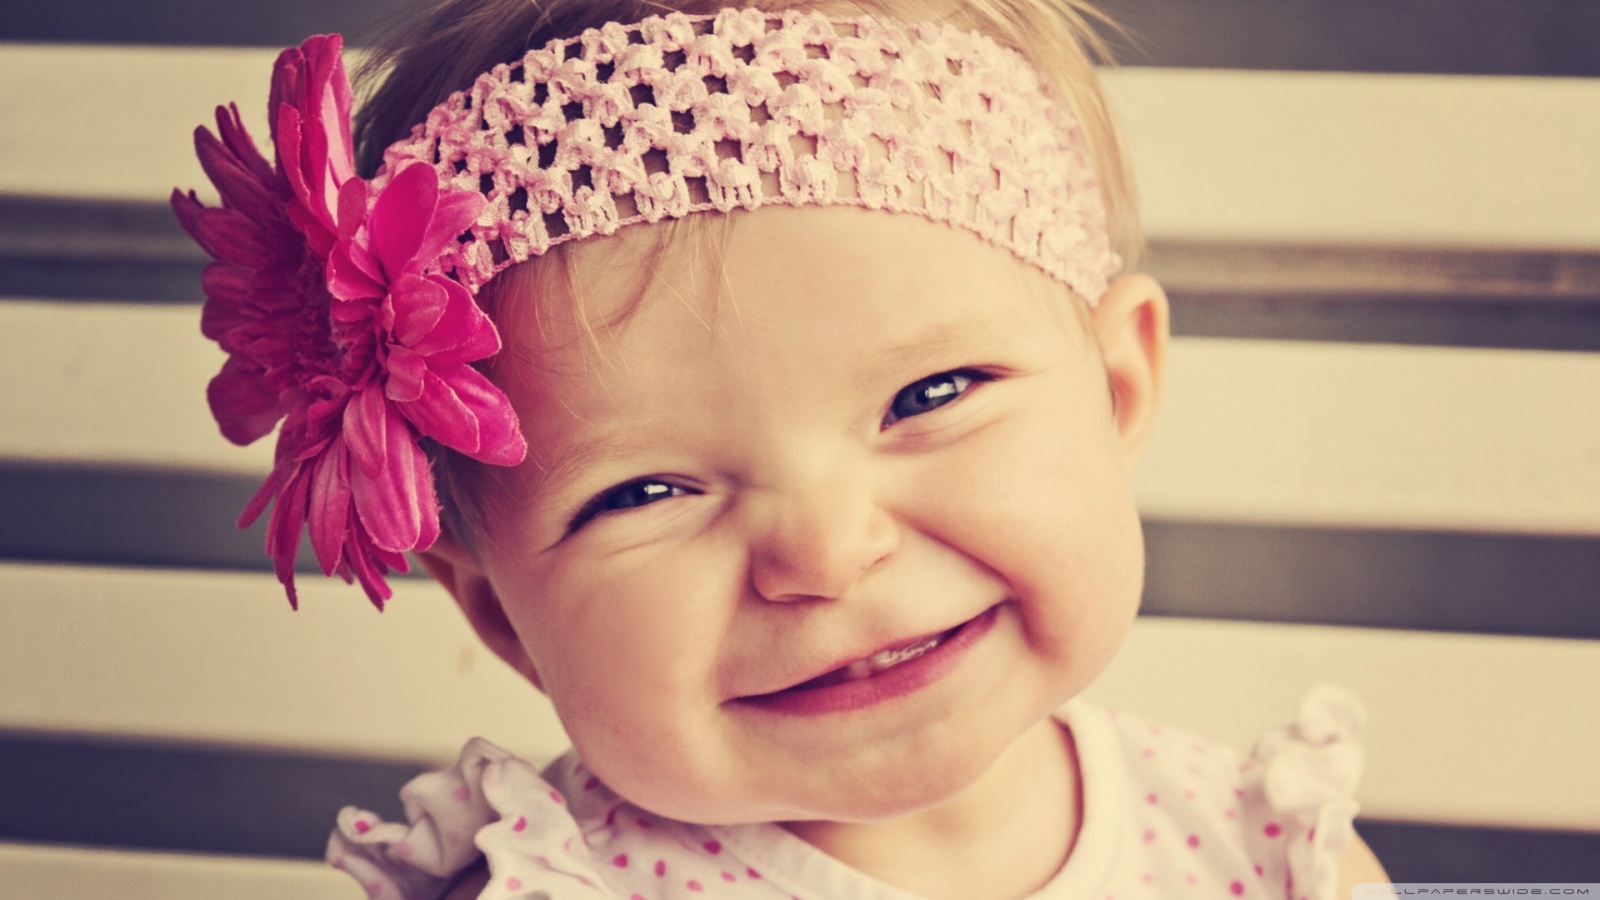 CAP: Cute Baby Smile